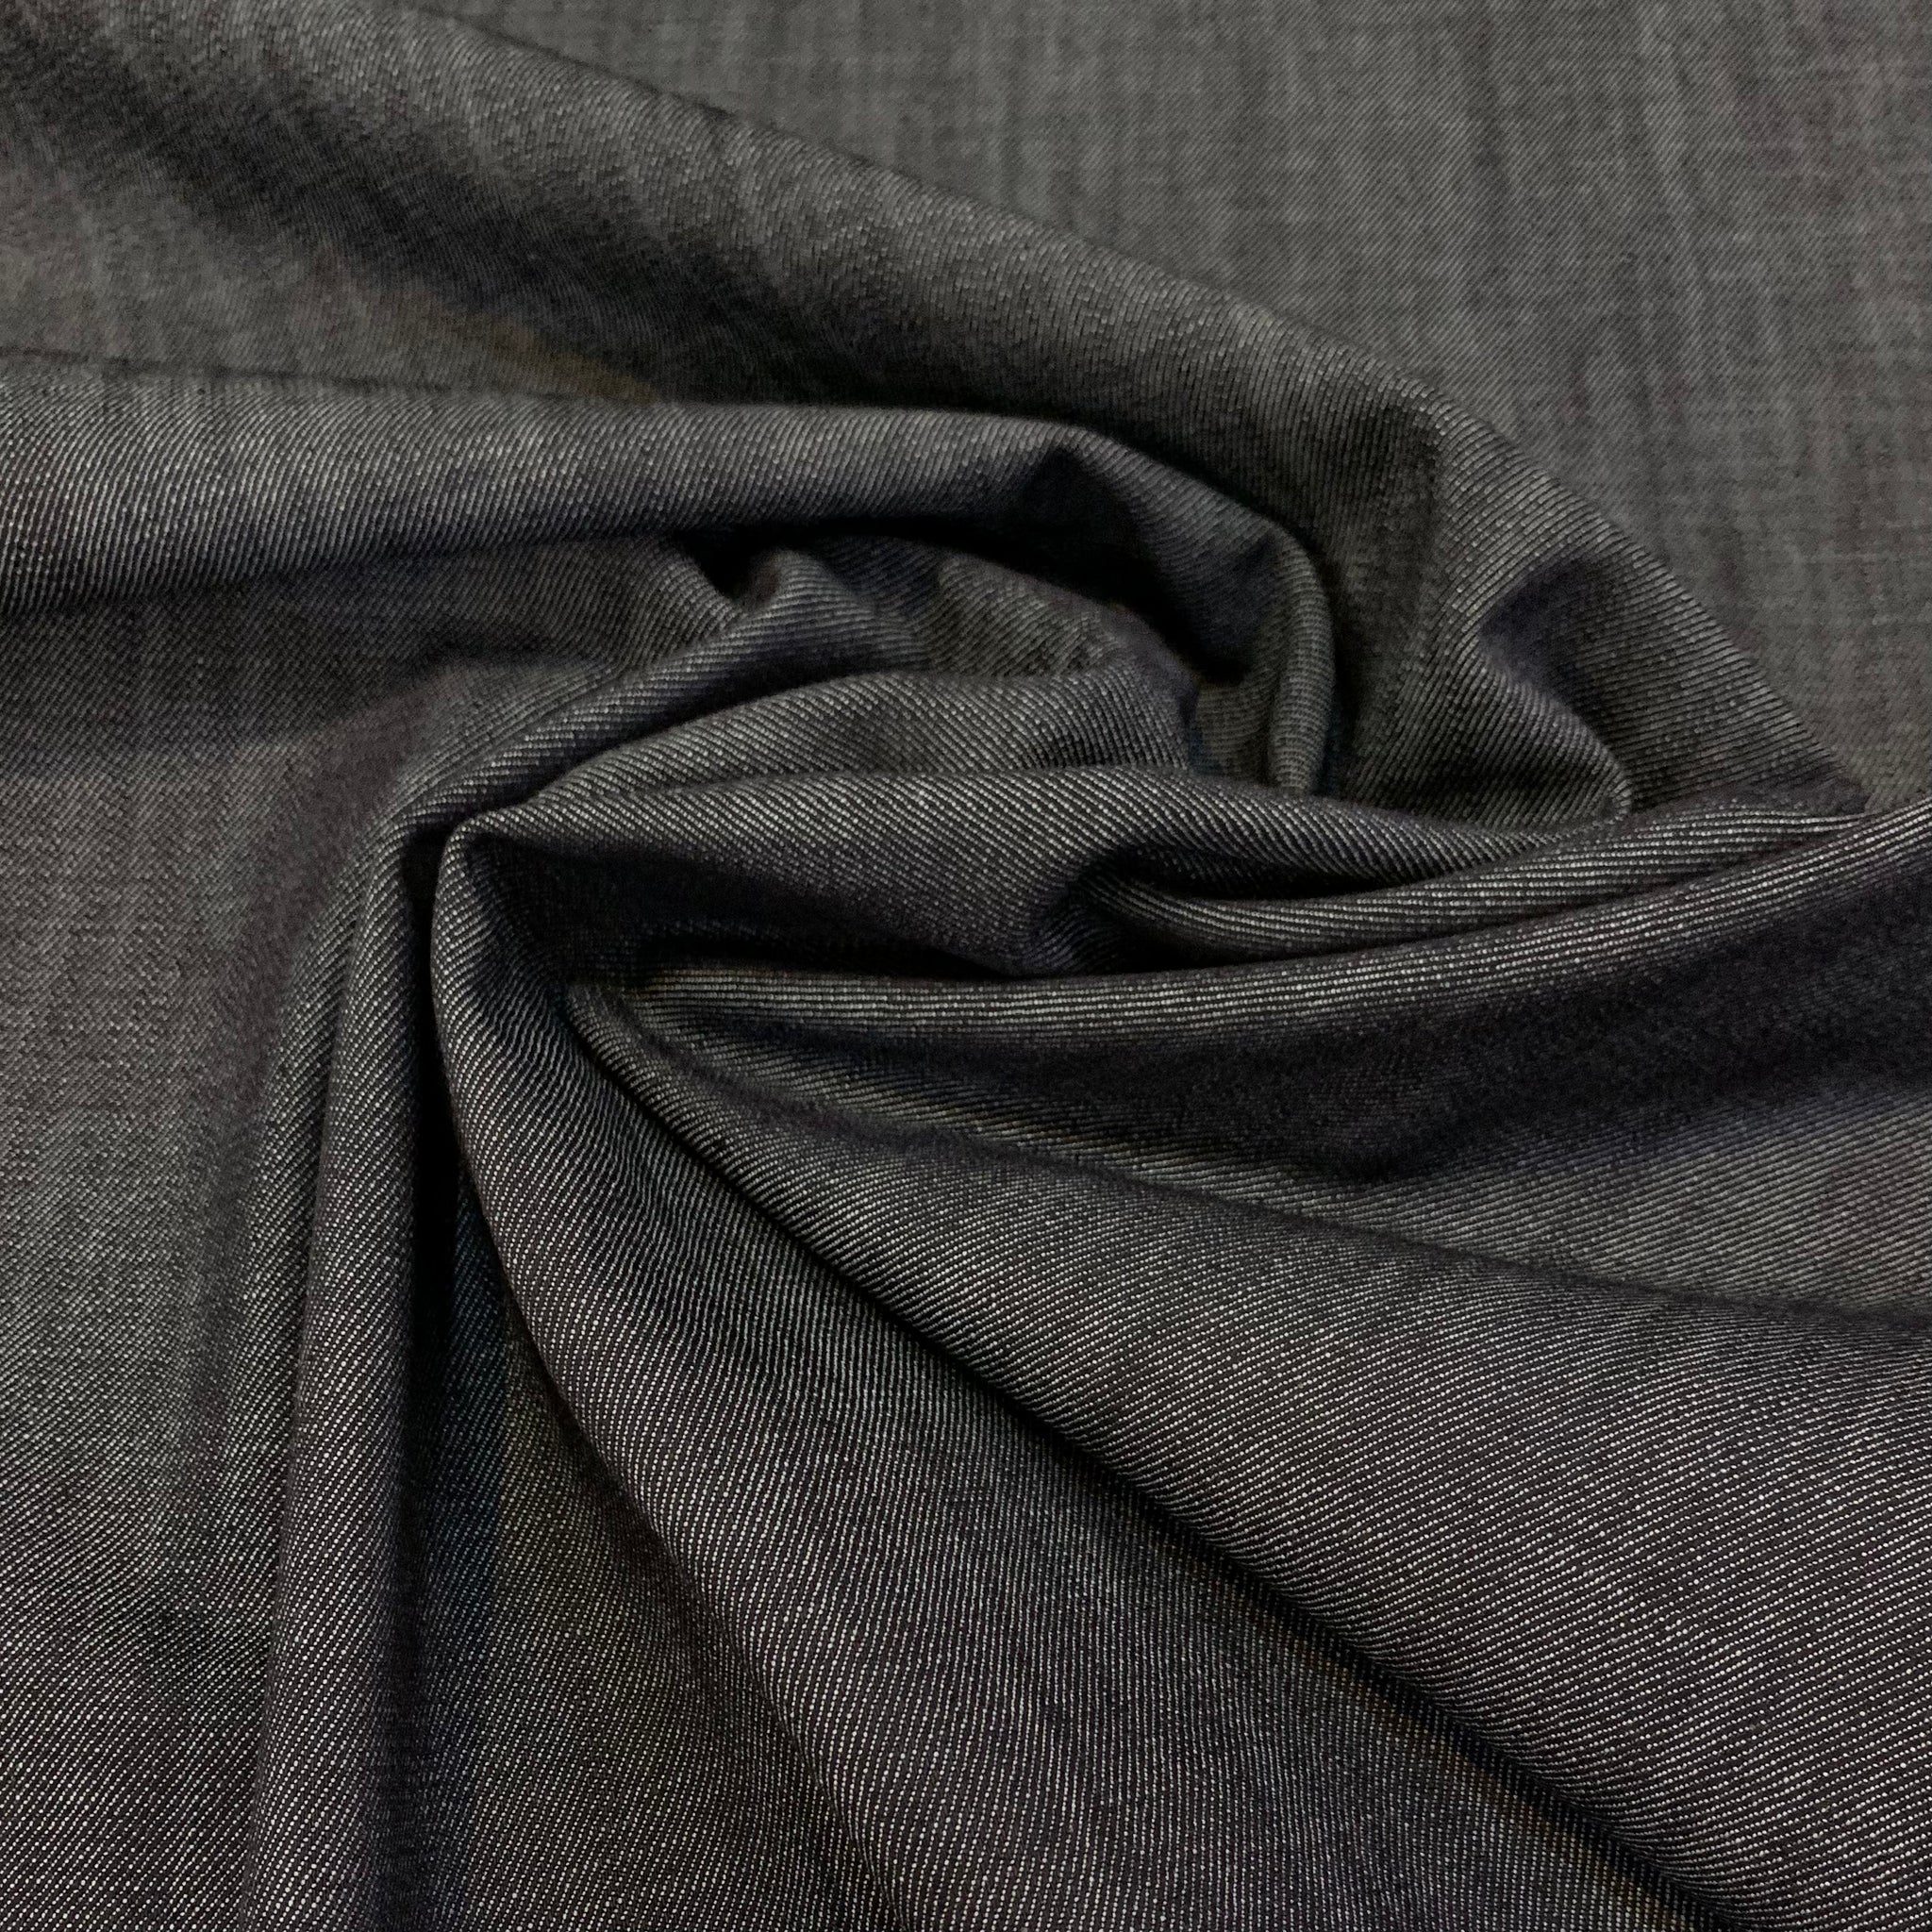 Stretch Denim Cotton Spandex Fabric - Washed Denim